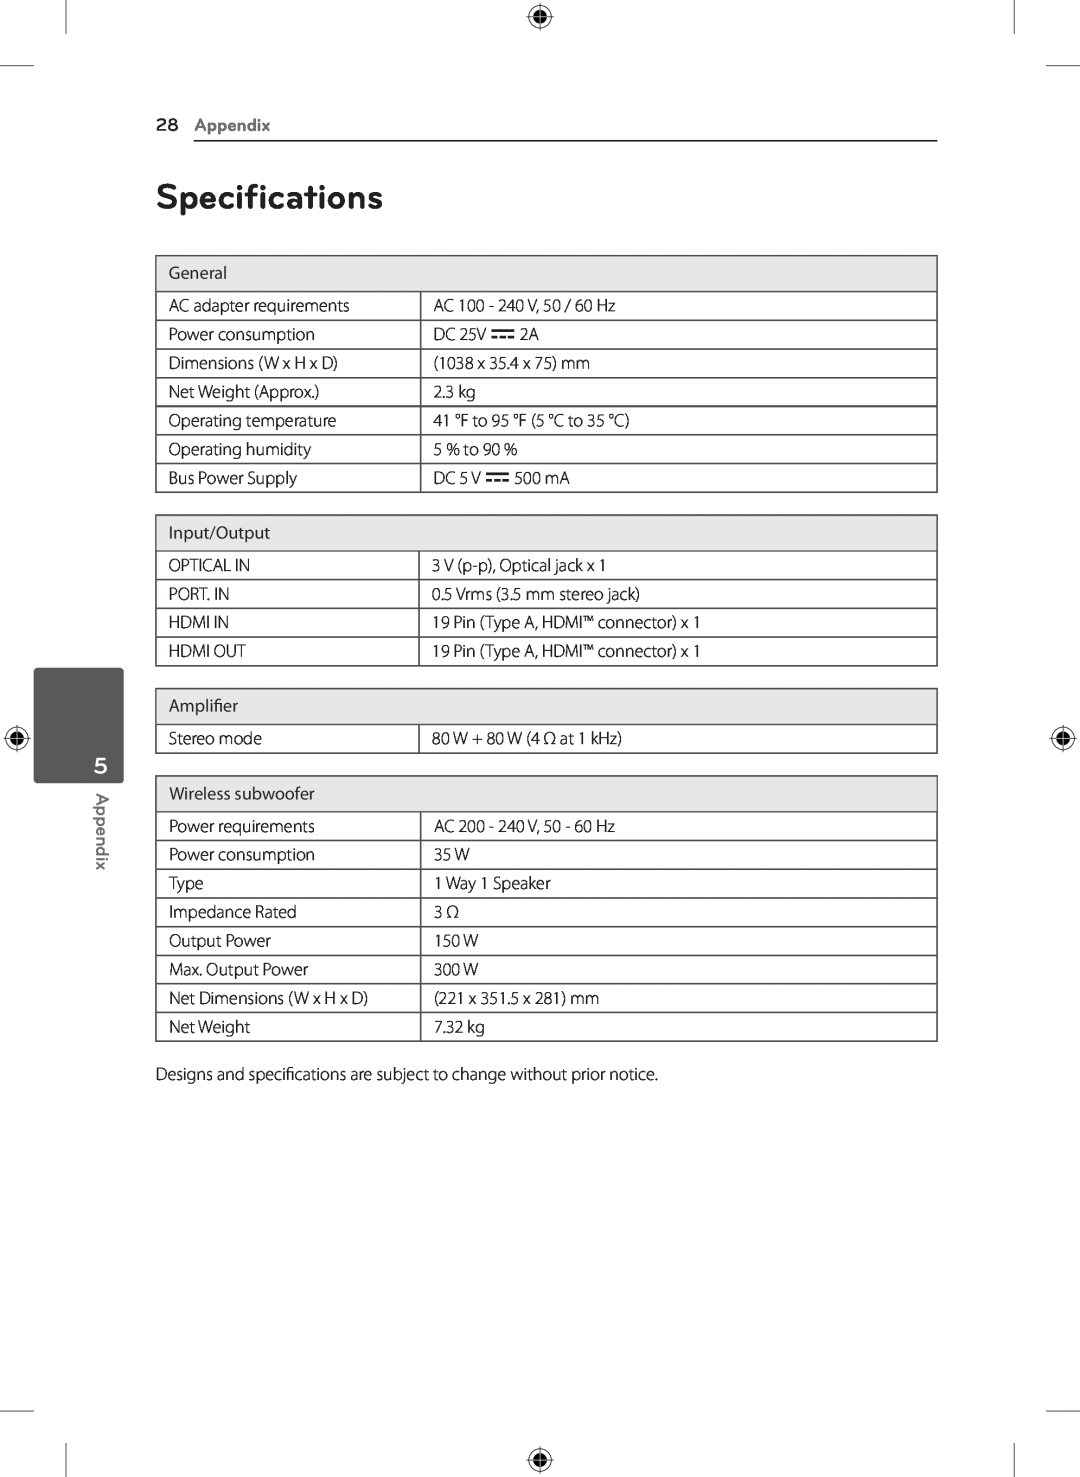 LG Electronics S43A1-D, NB4530A owner manual Specifications, Appendix 